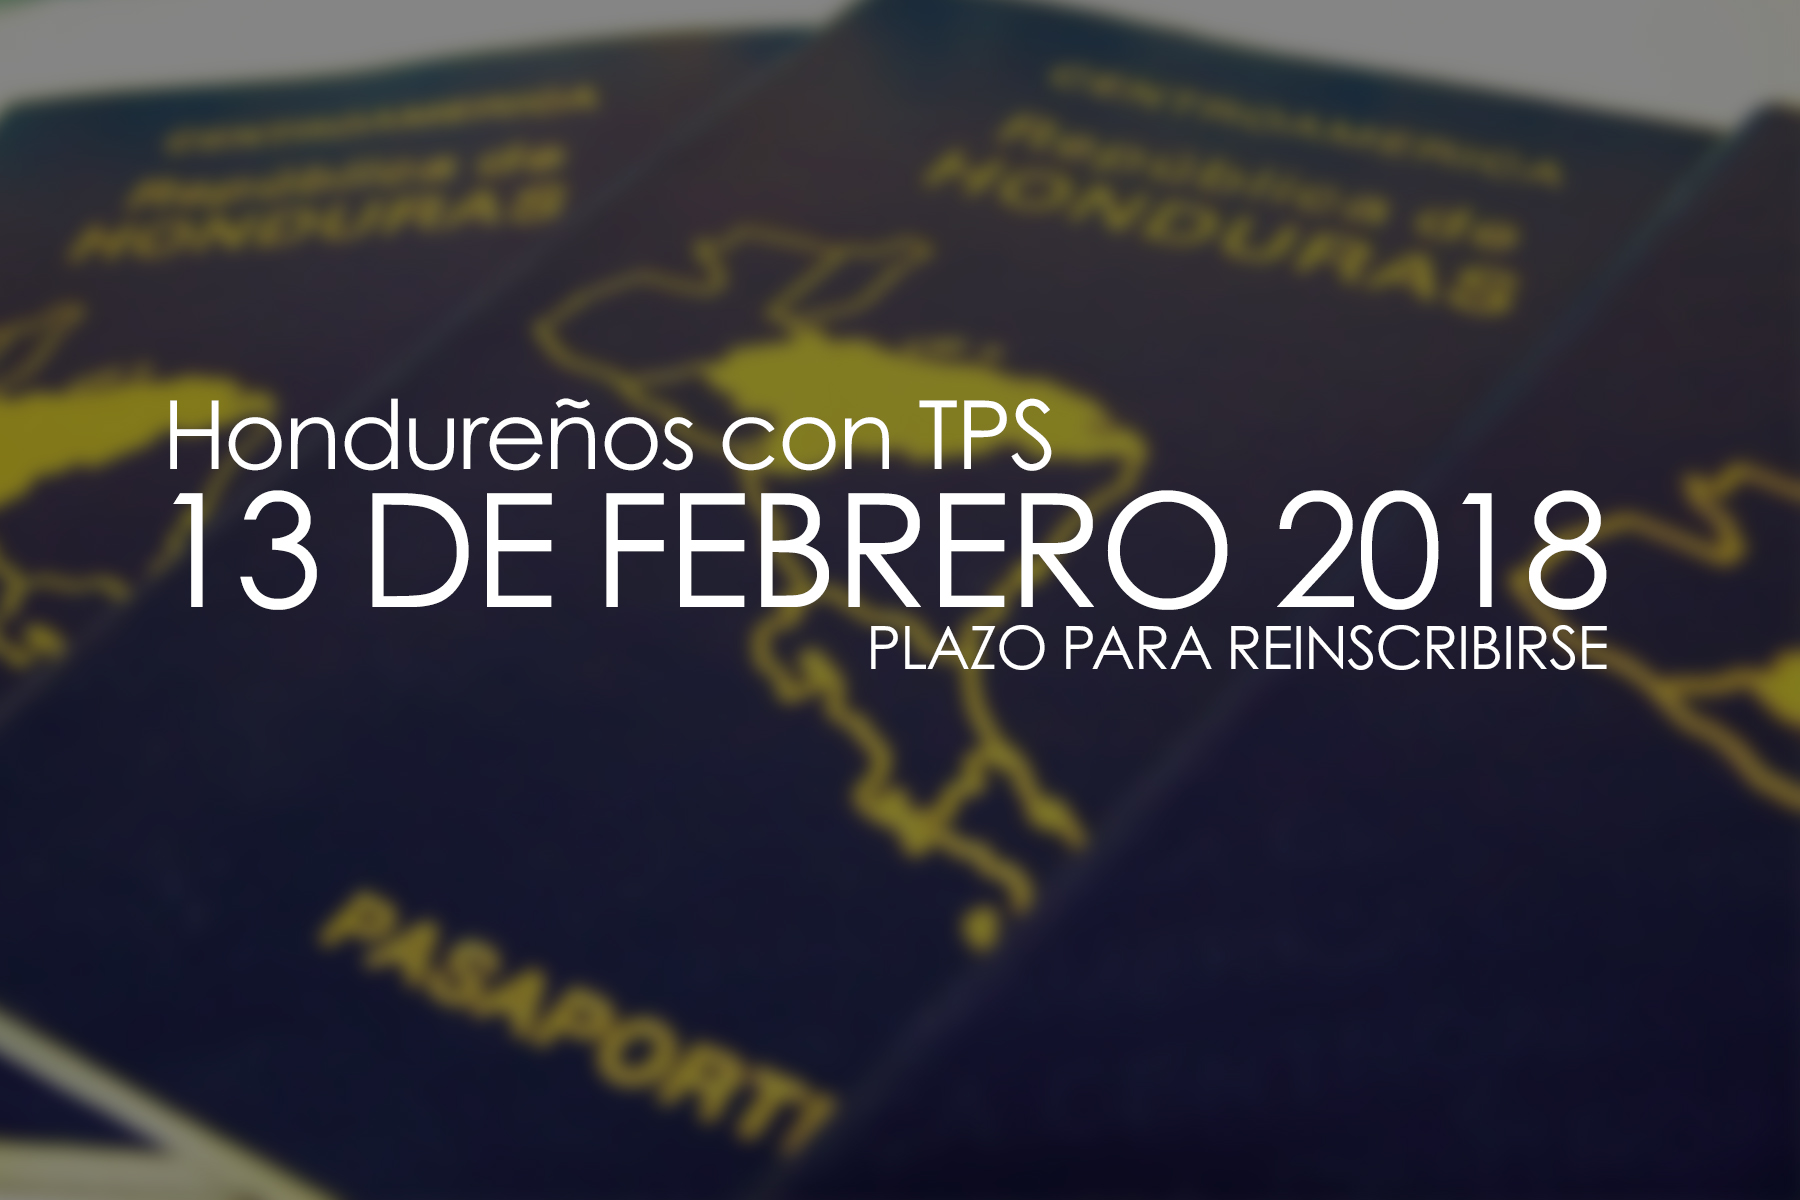 Llaman a hondureños a reinscribirse al TPS 